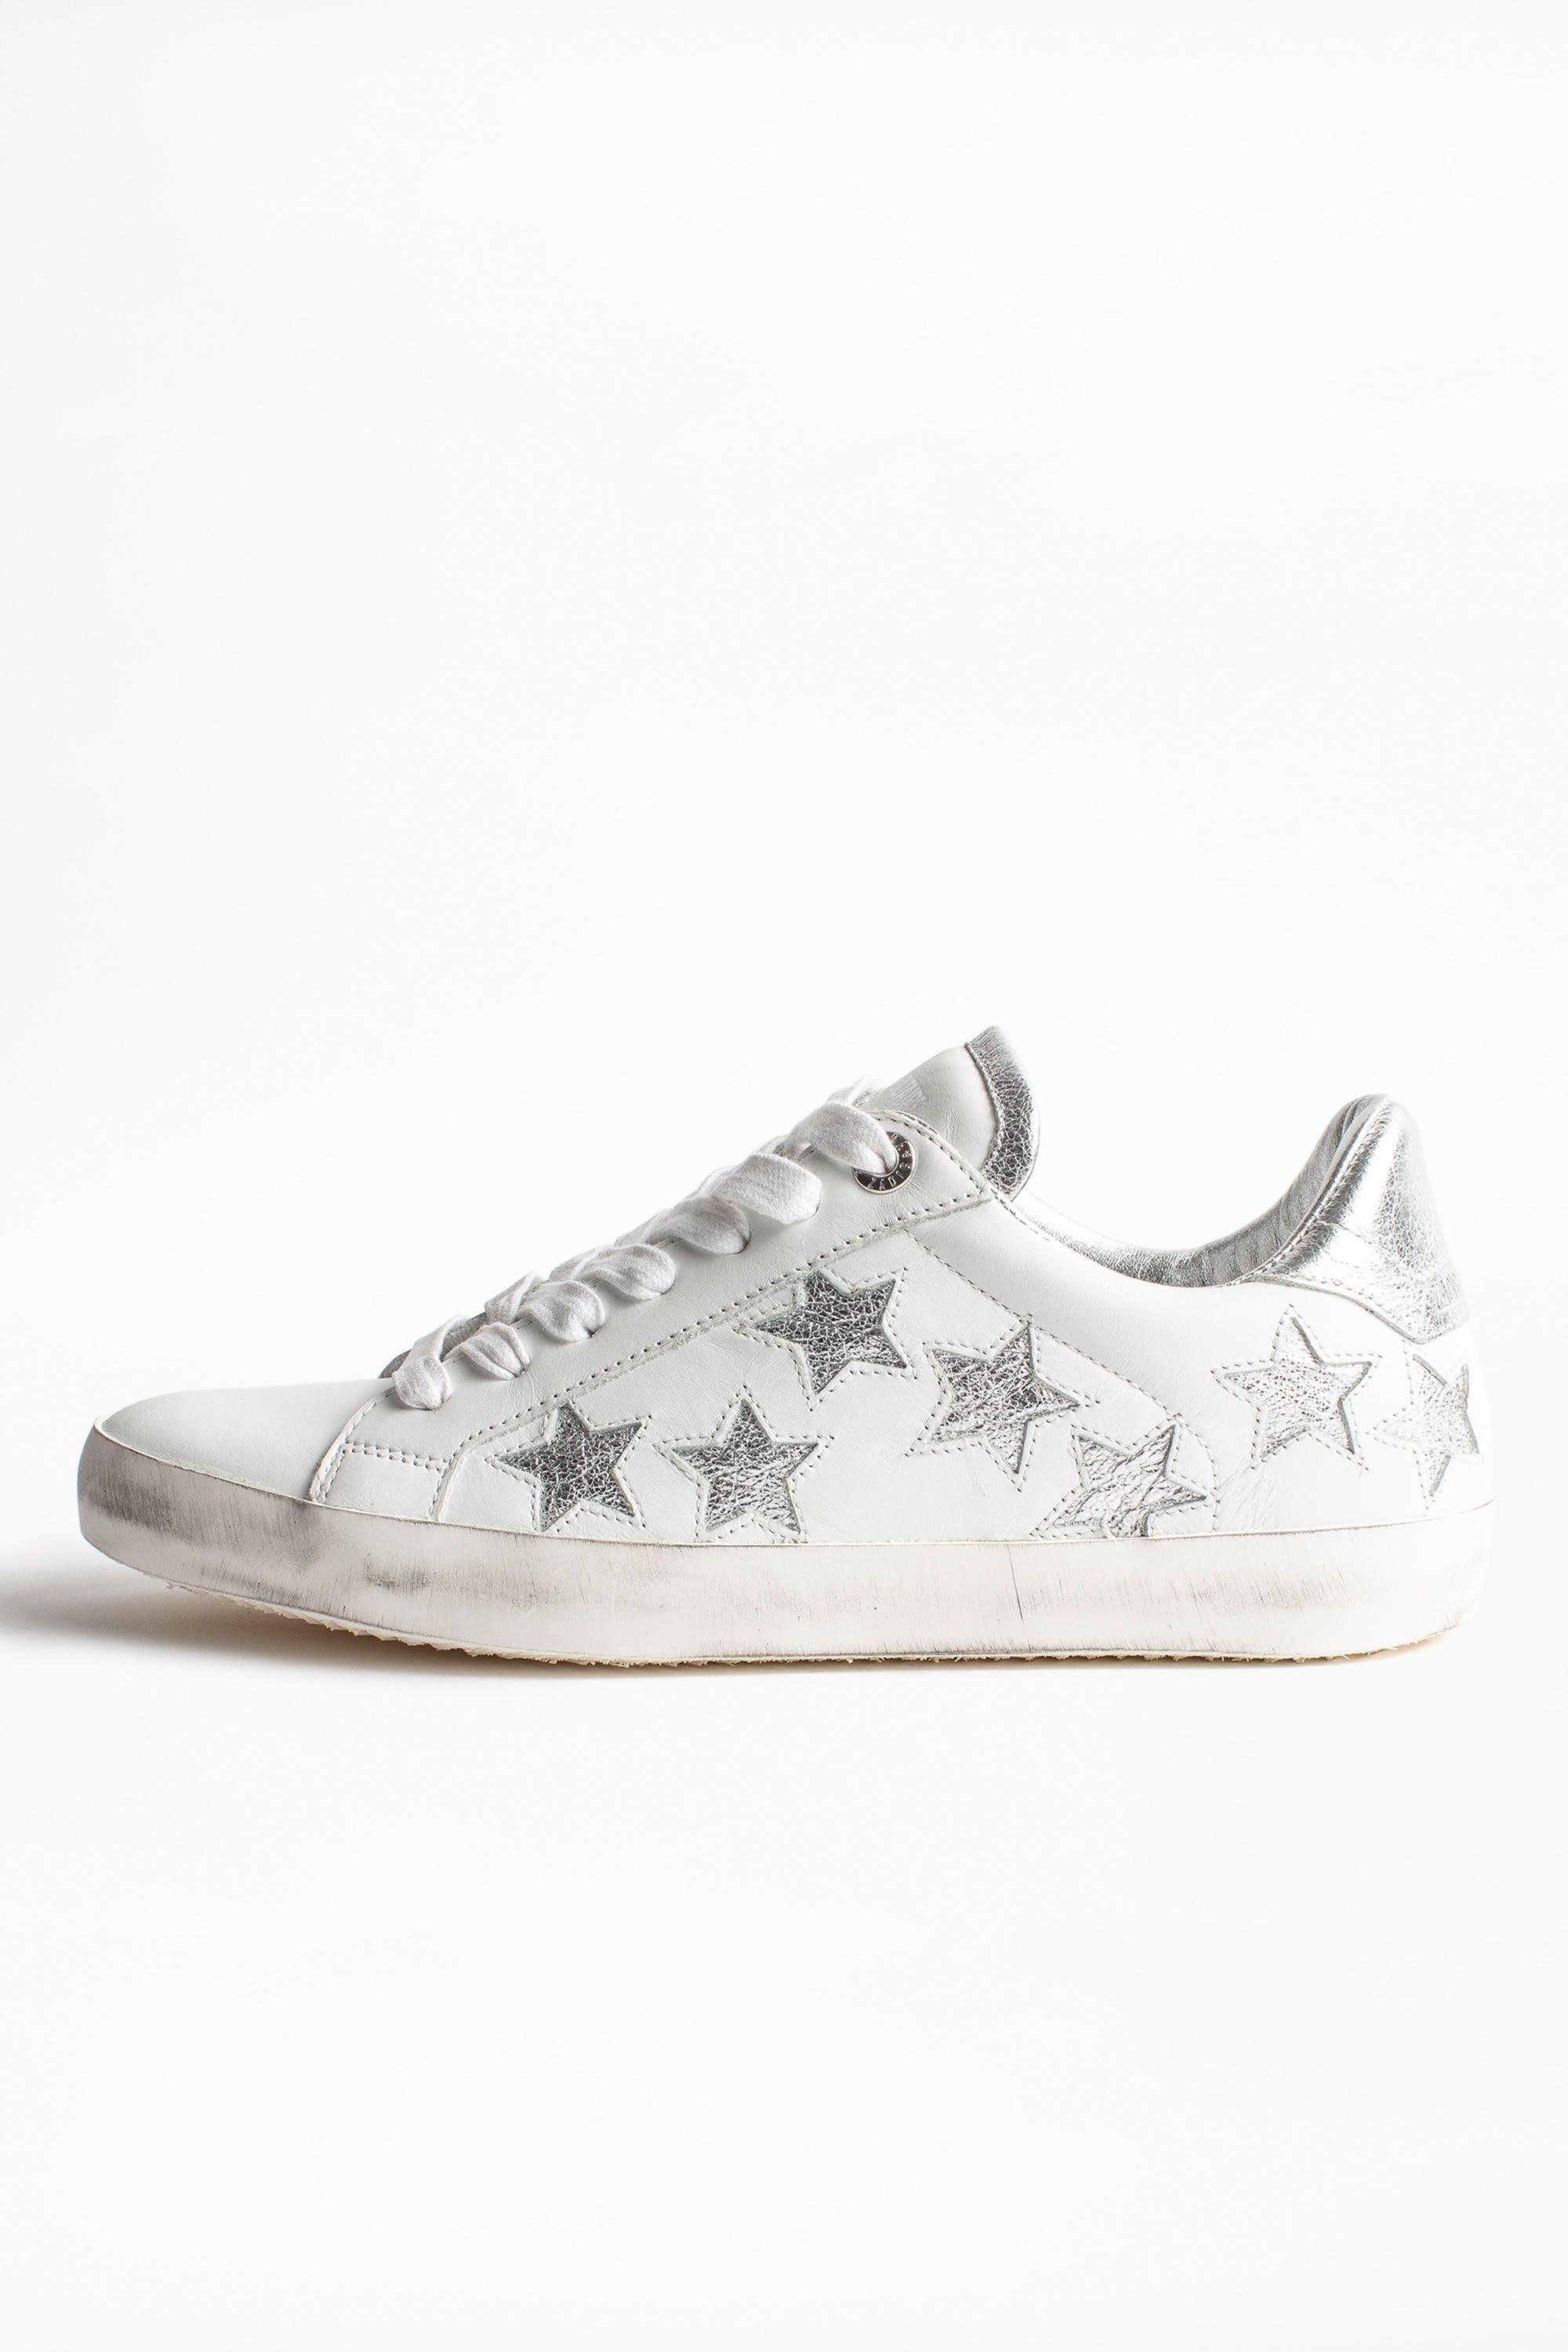 Zadig & Voltaire Zv1747 Stars Metallic Sneakers in White | Lyst